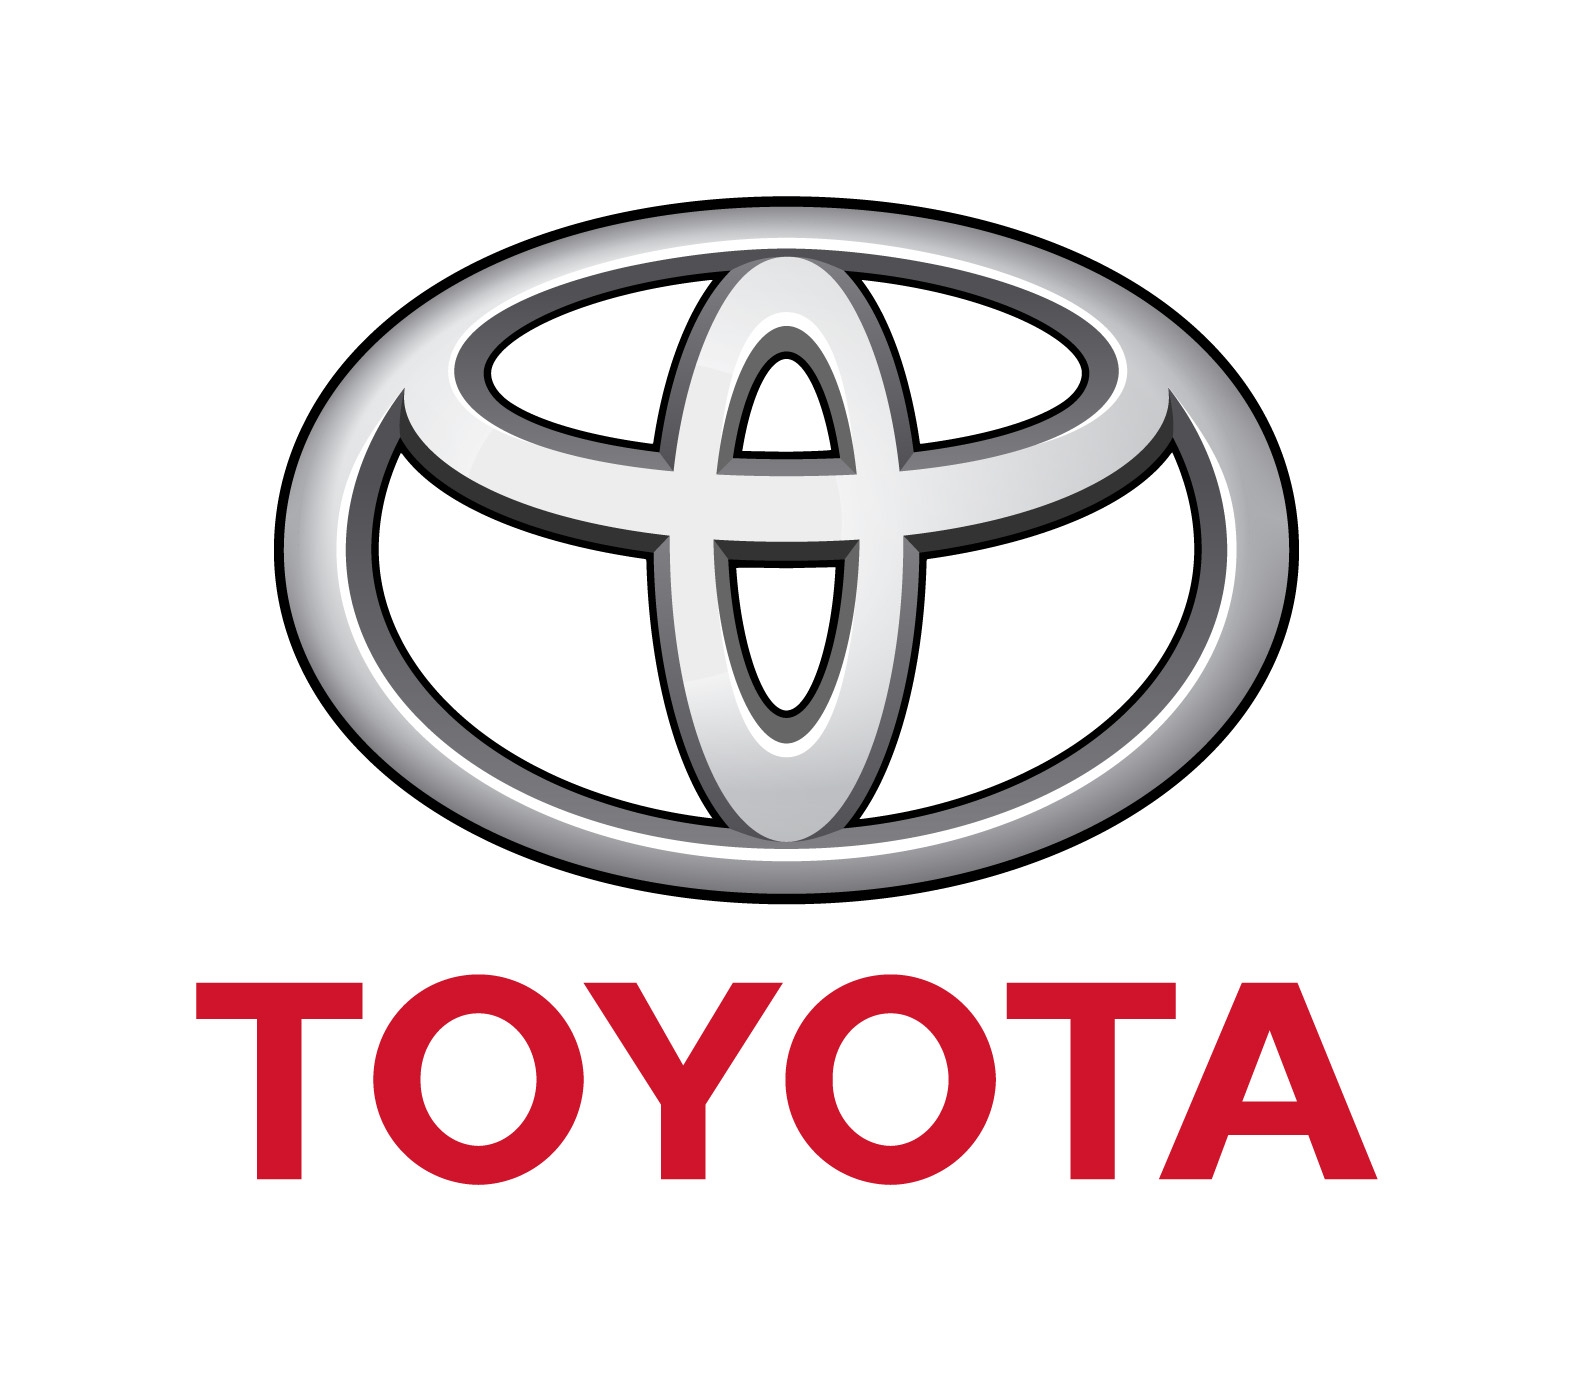 Japanese-car-brands-Toyota-logo.jpg